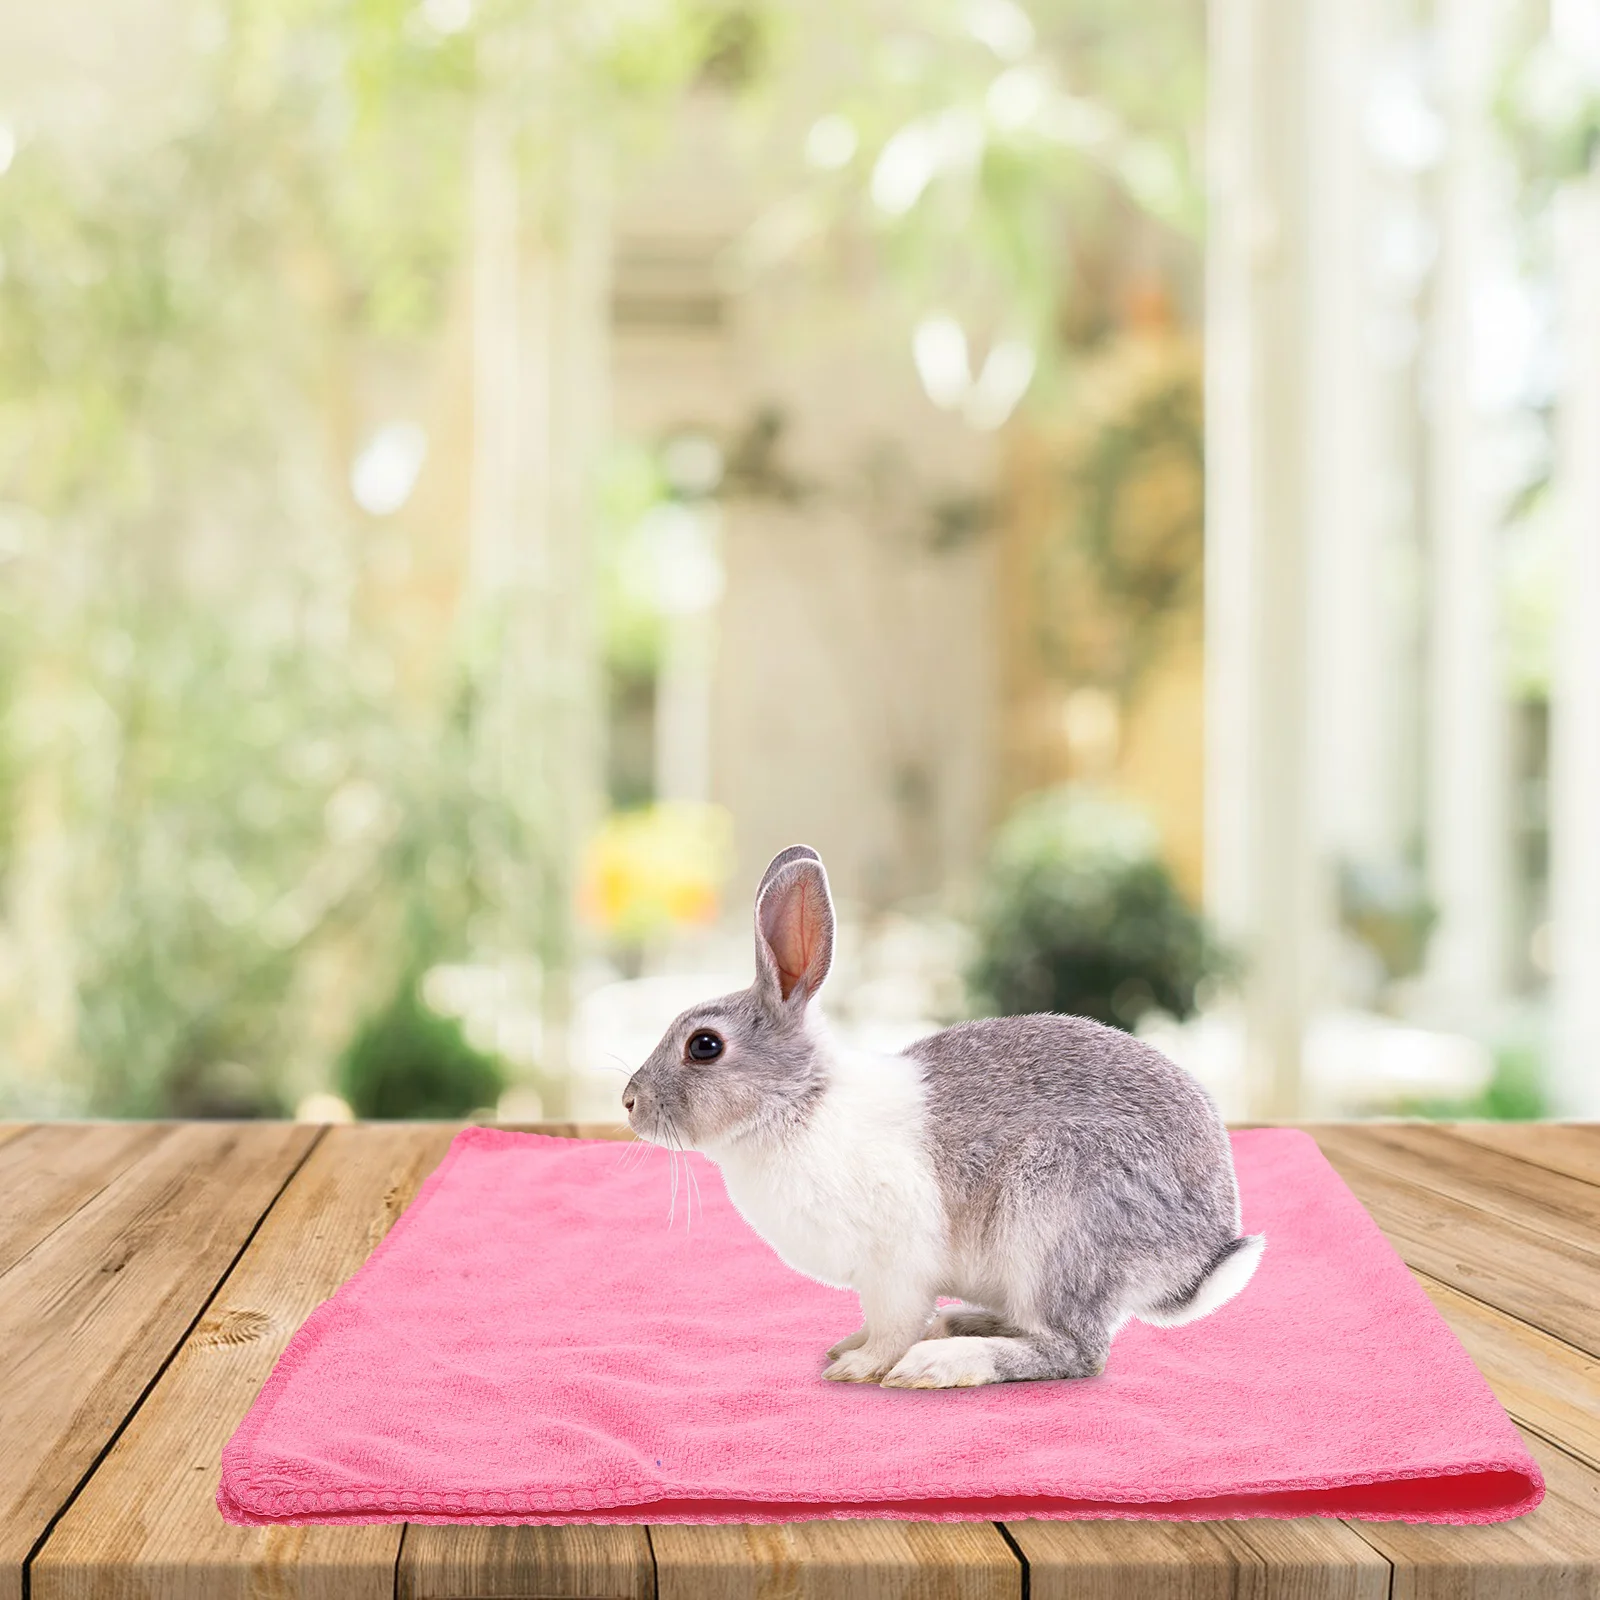 

5pcs Washable Blankets for Guinea Pig Small Animal Pee Pad Pet Blanket Reusable Sleep Bedding Mat